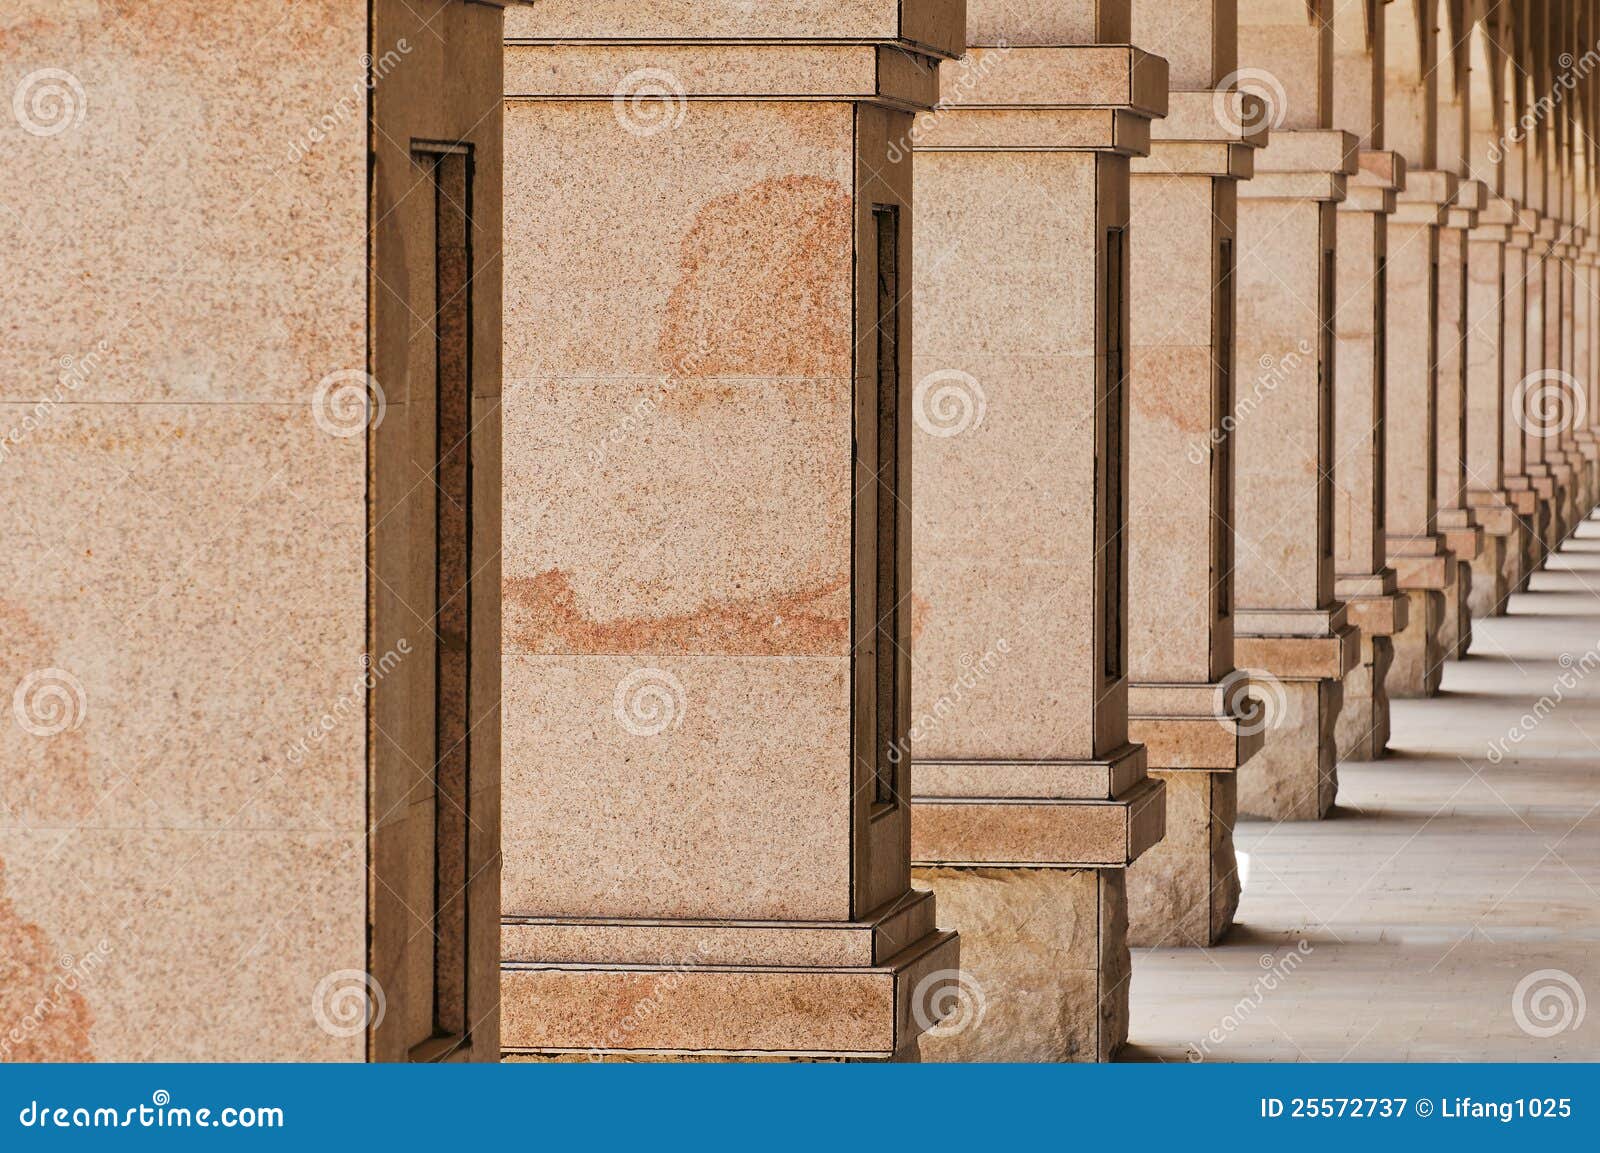 11,173 Wallpaper Designs Pillar Images, Stock Photos & Vectors |  Shutterstock